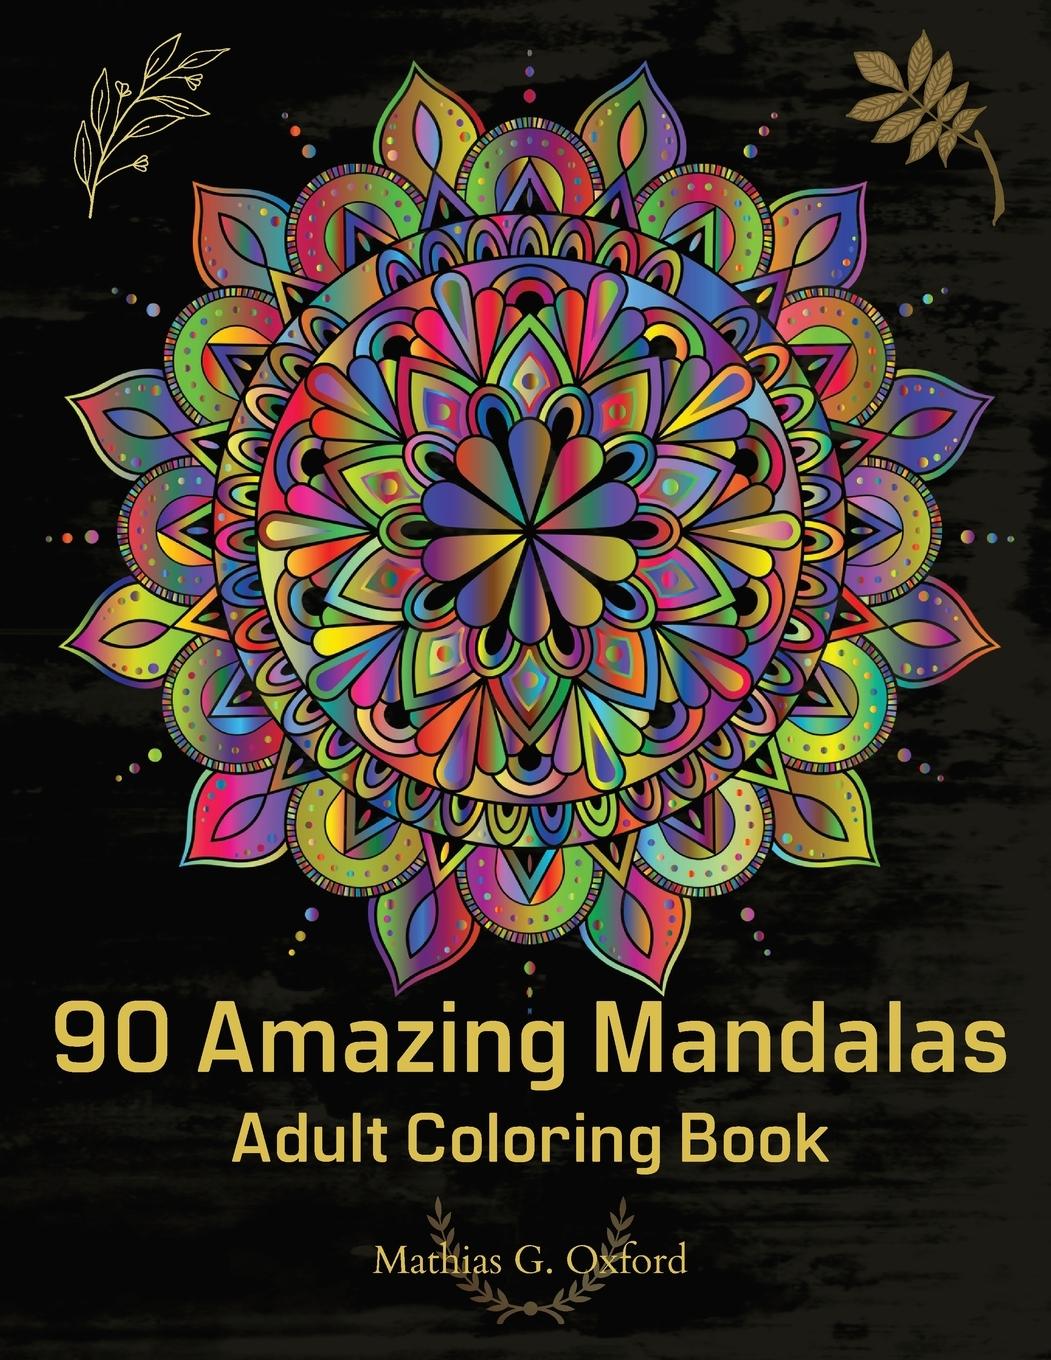 Book 90 Amazing Mandalas 